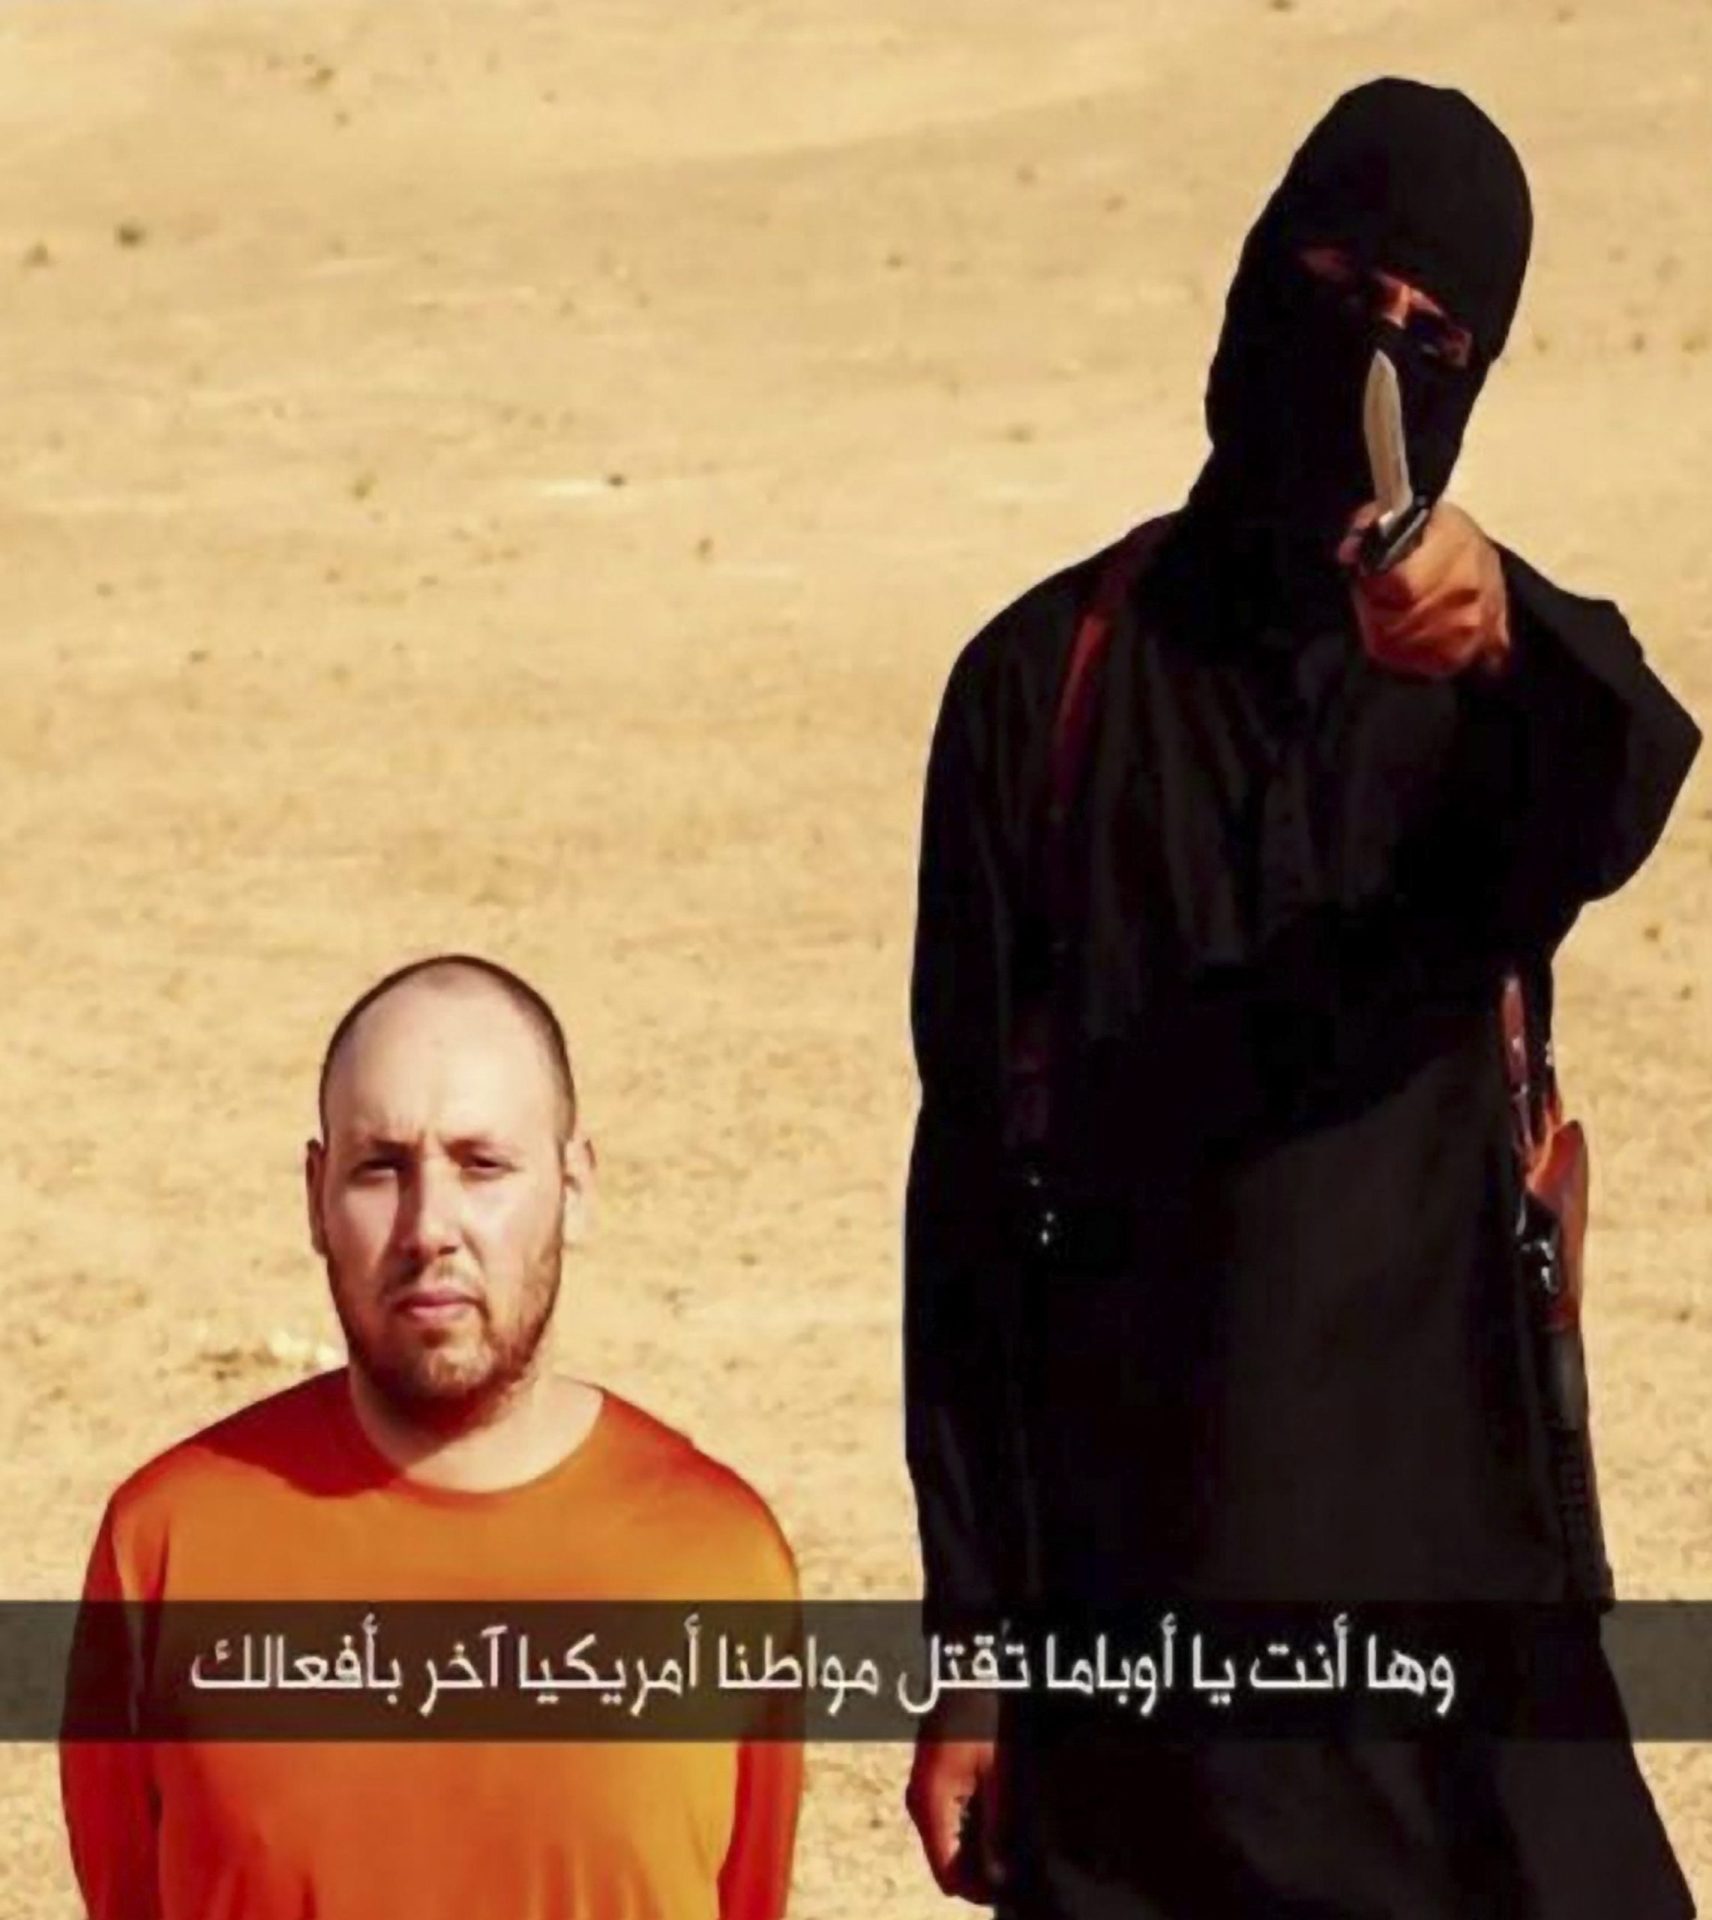 RTP deixa de transmitir imagens de ‘terror’ islâmico